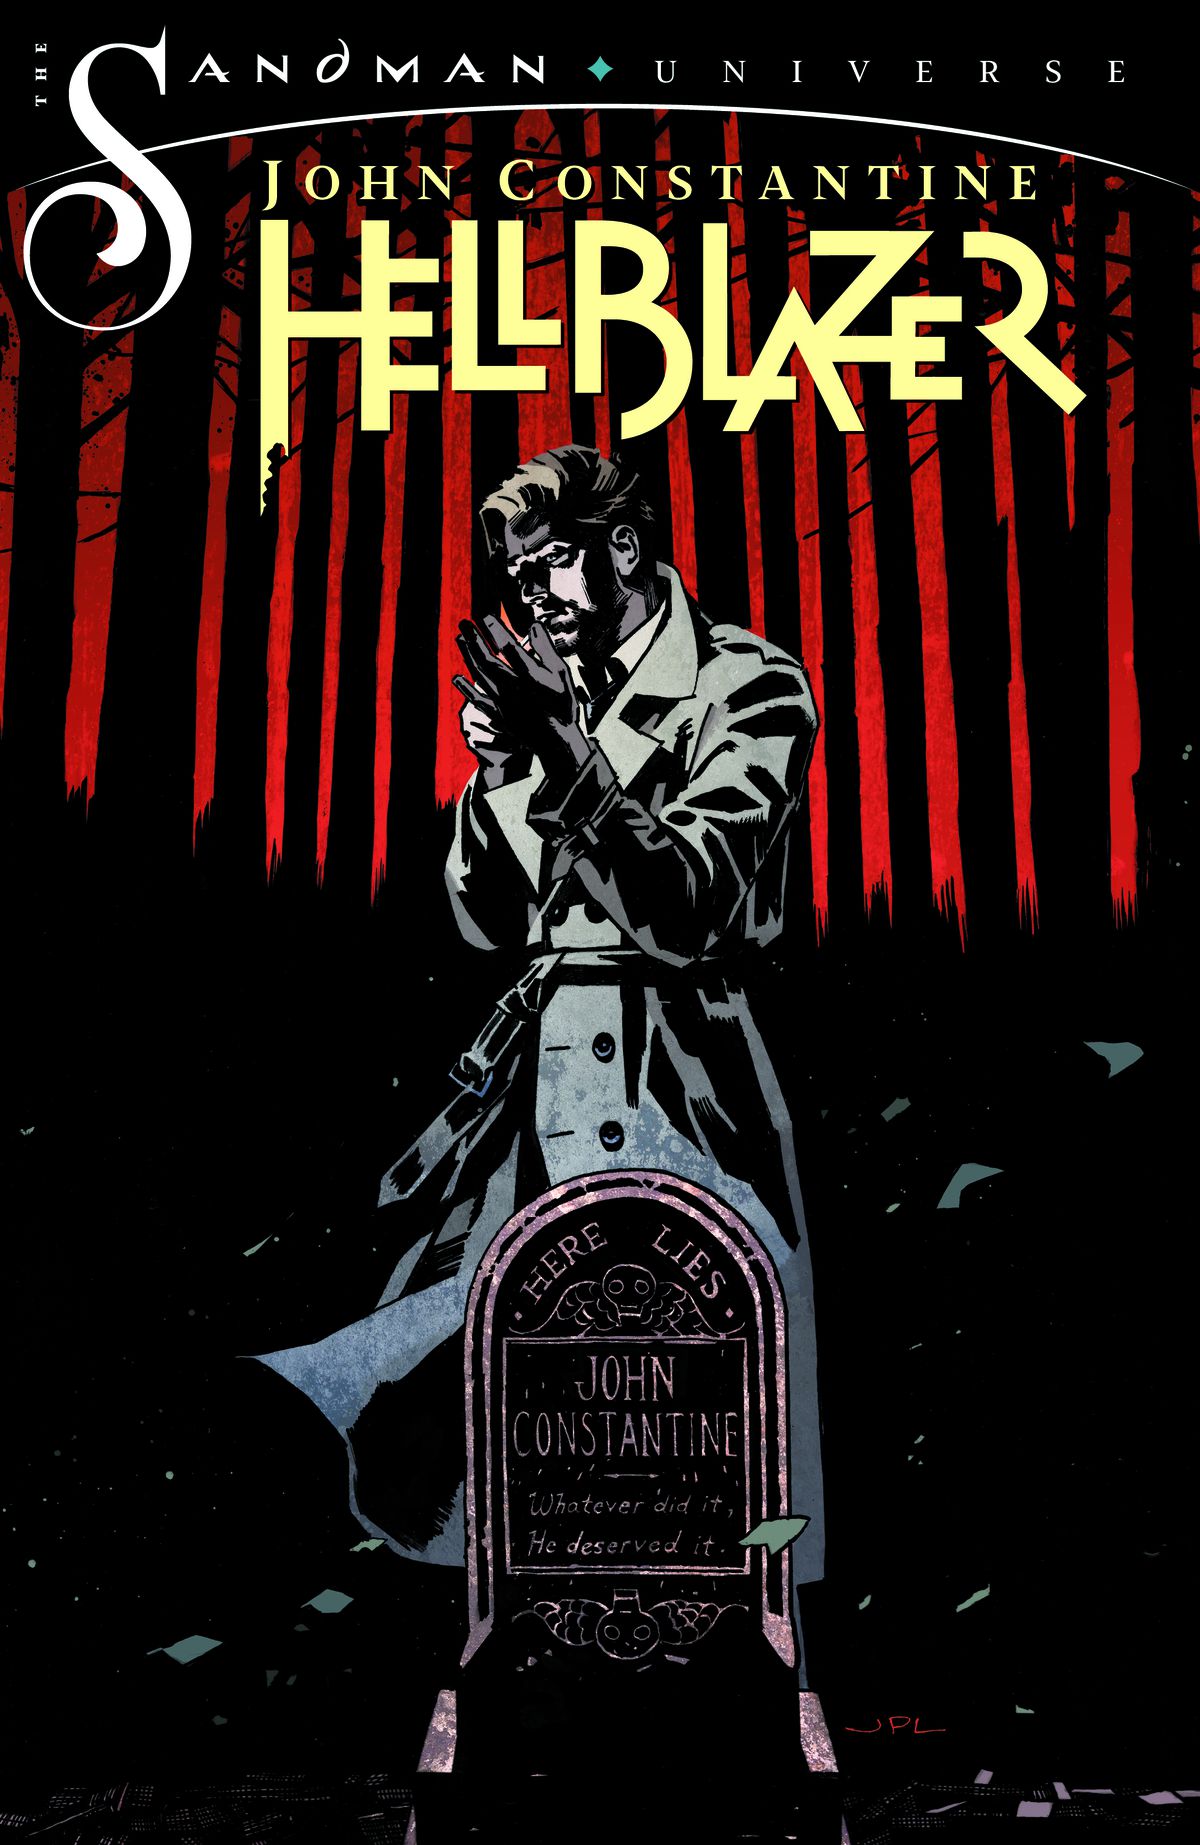 John Constantine on the cover of Hellblazer John Constantine, Hellblazer #1, DC Comics (2019).